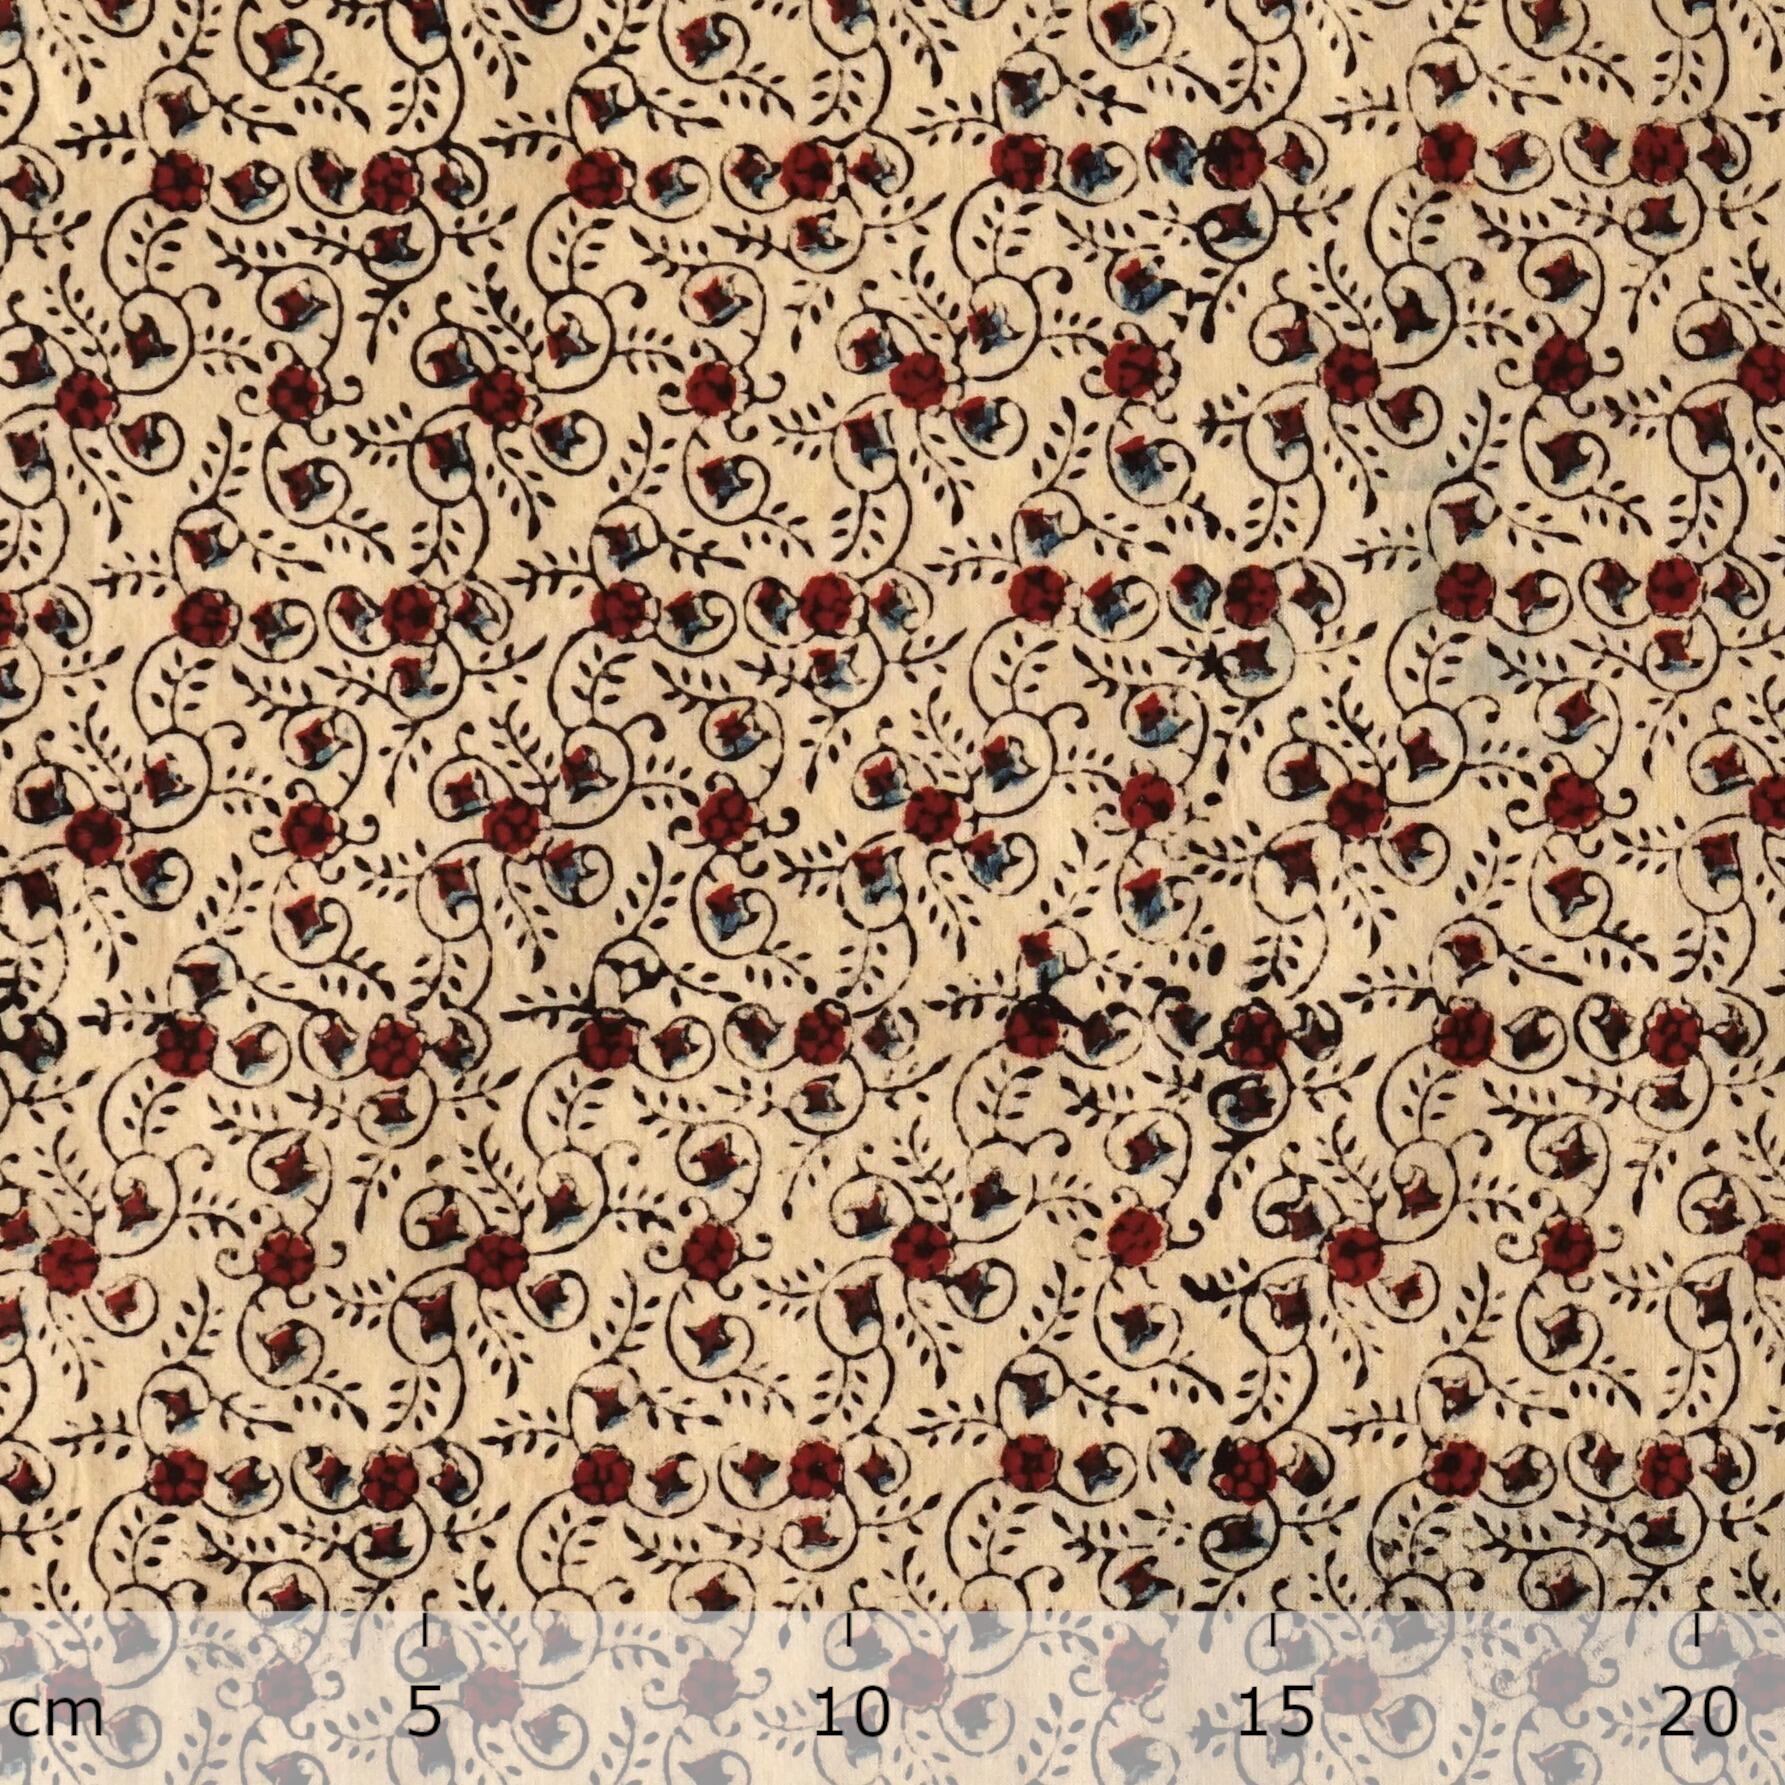 SIK32 - Indian Block-Printed Cotton - Superbloom Design - Indigo, Red & Black Dye - Ruler